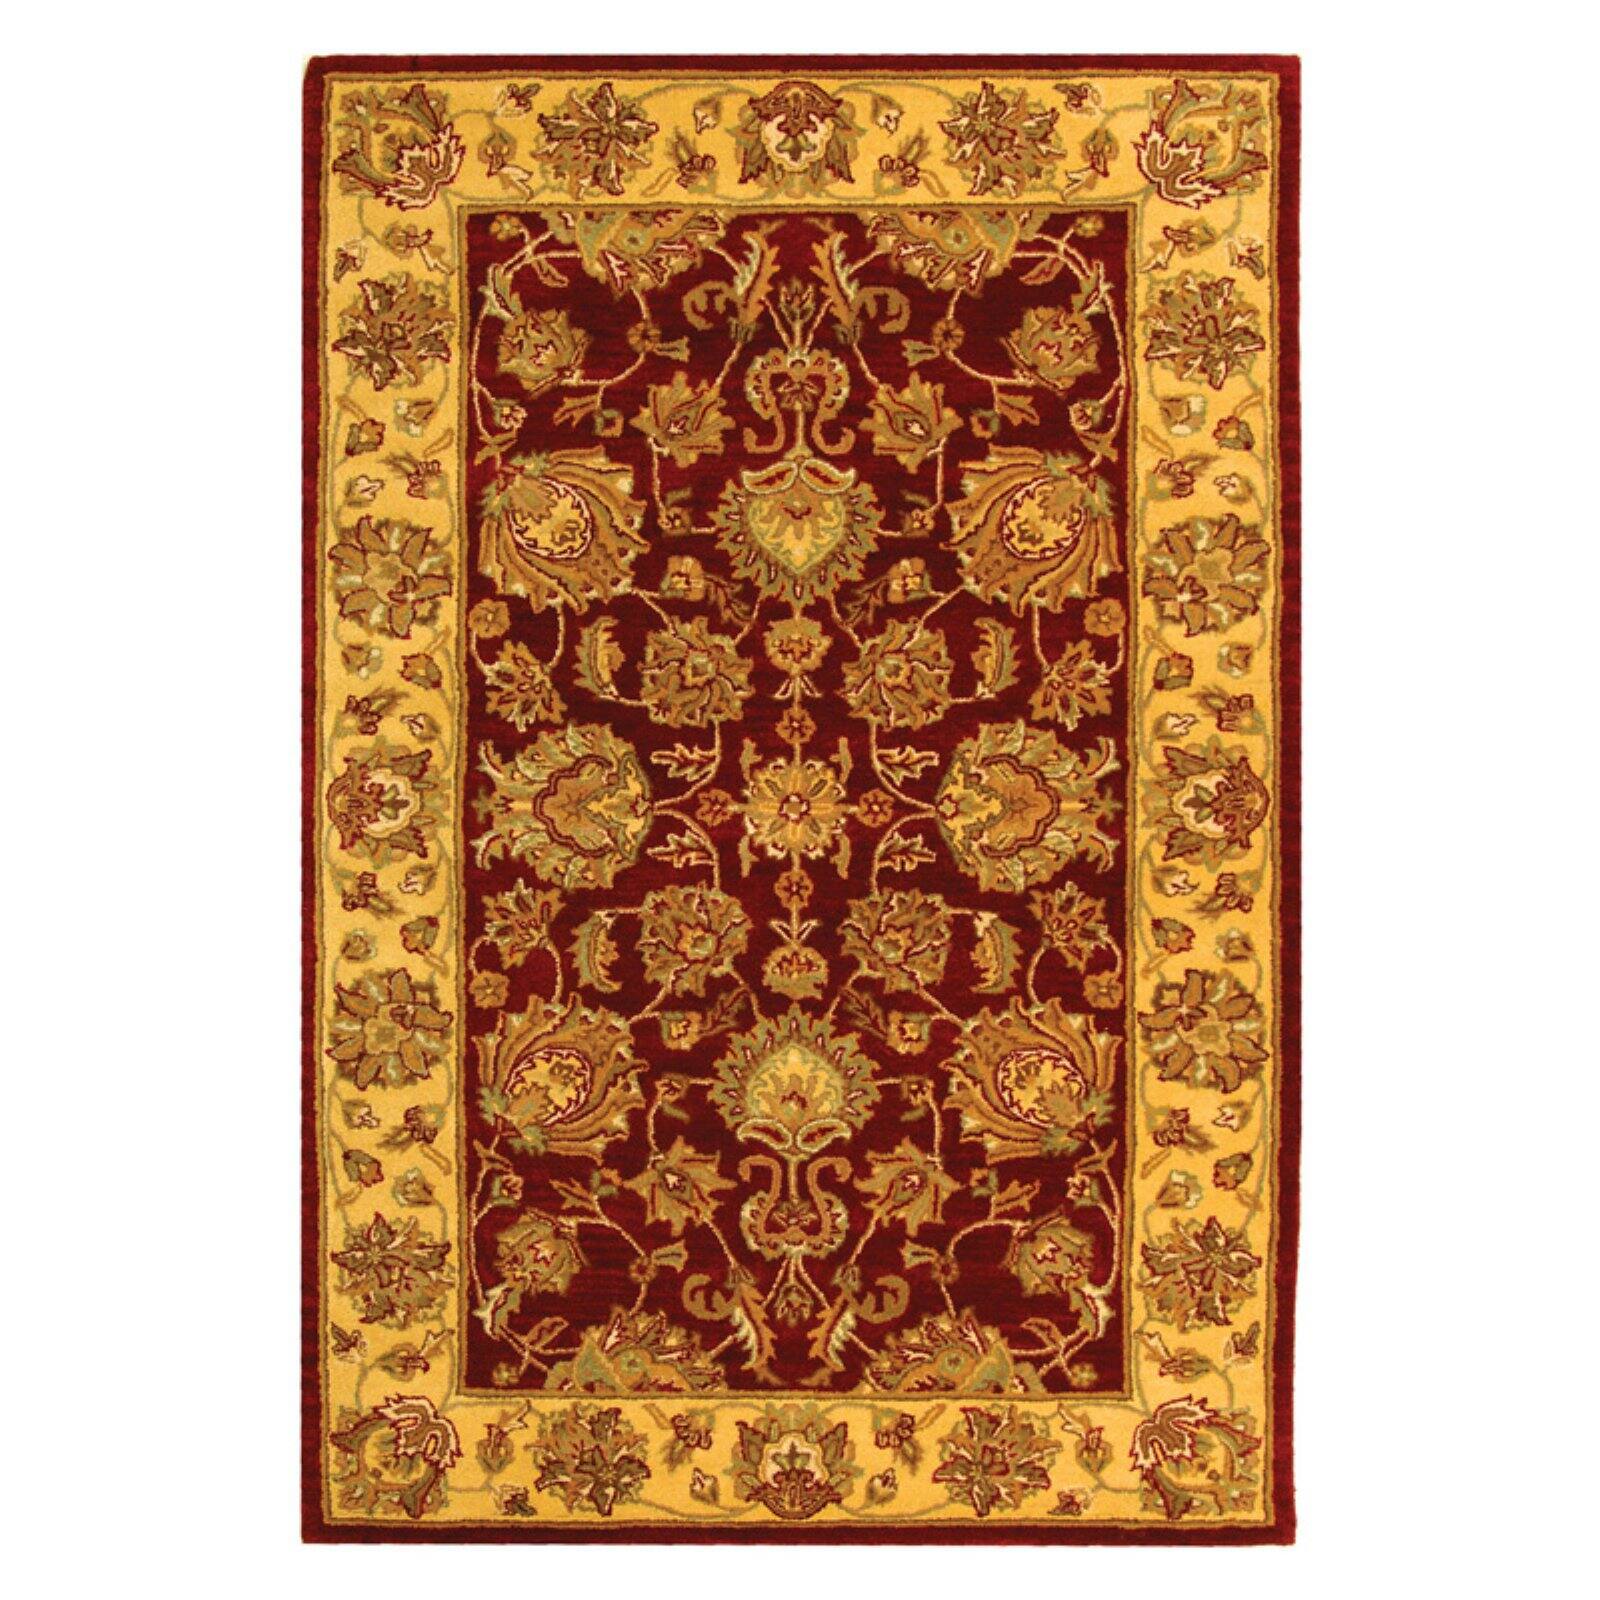 SAFAVIEH Heritage Regis Traditional Wool Runner Rug, Red/Gold, 2'3" x 12' - image 4 of 9